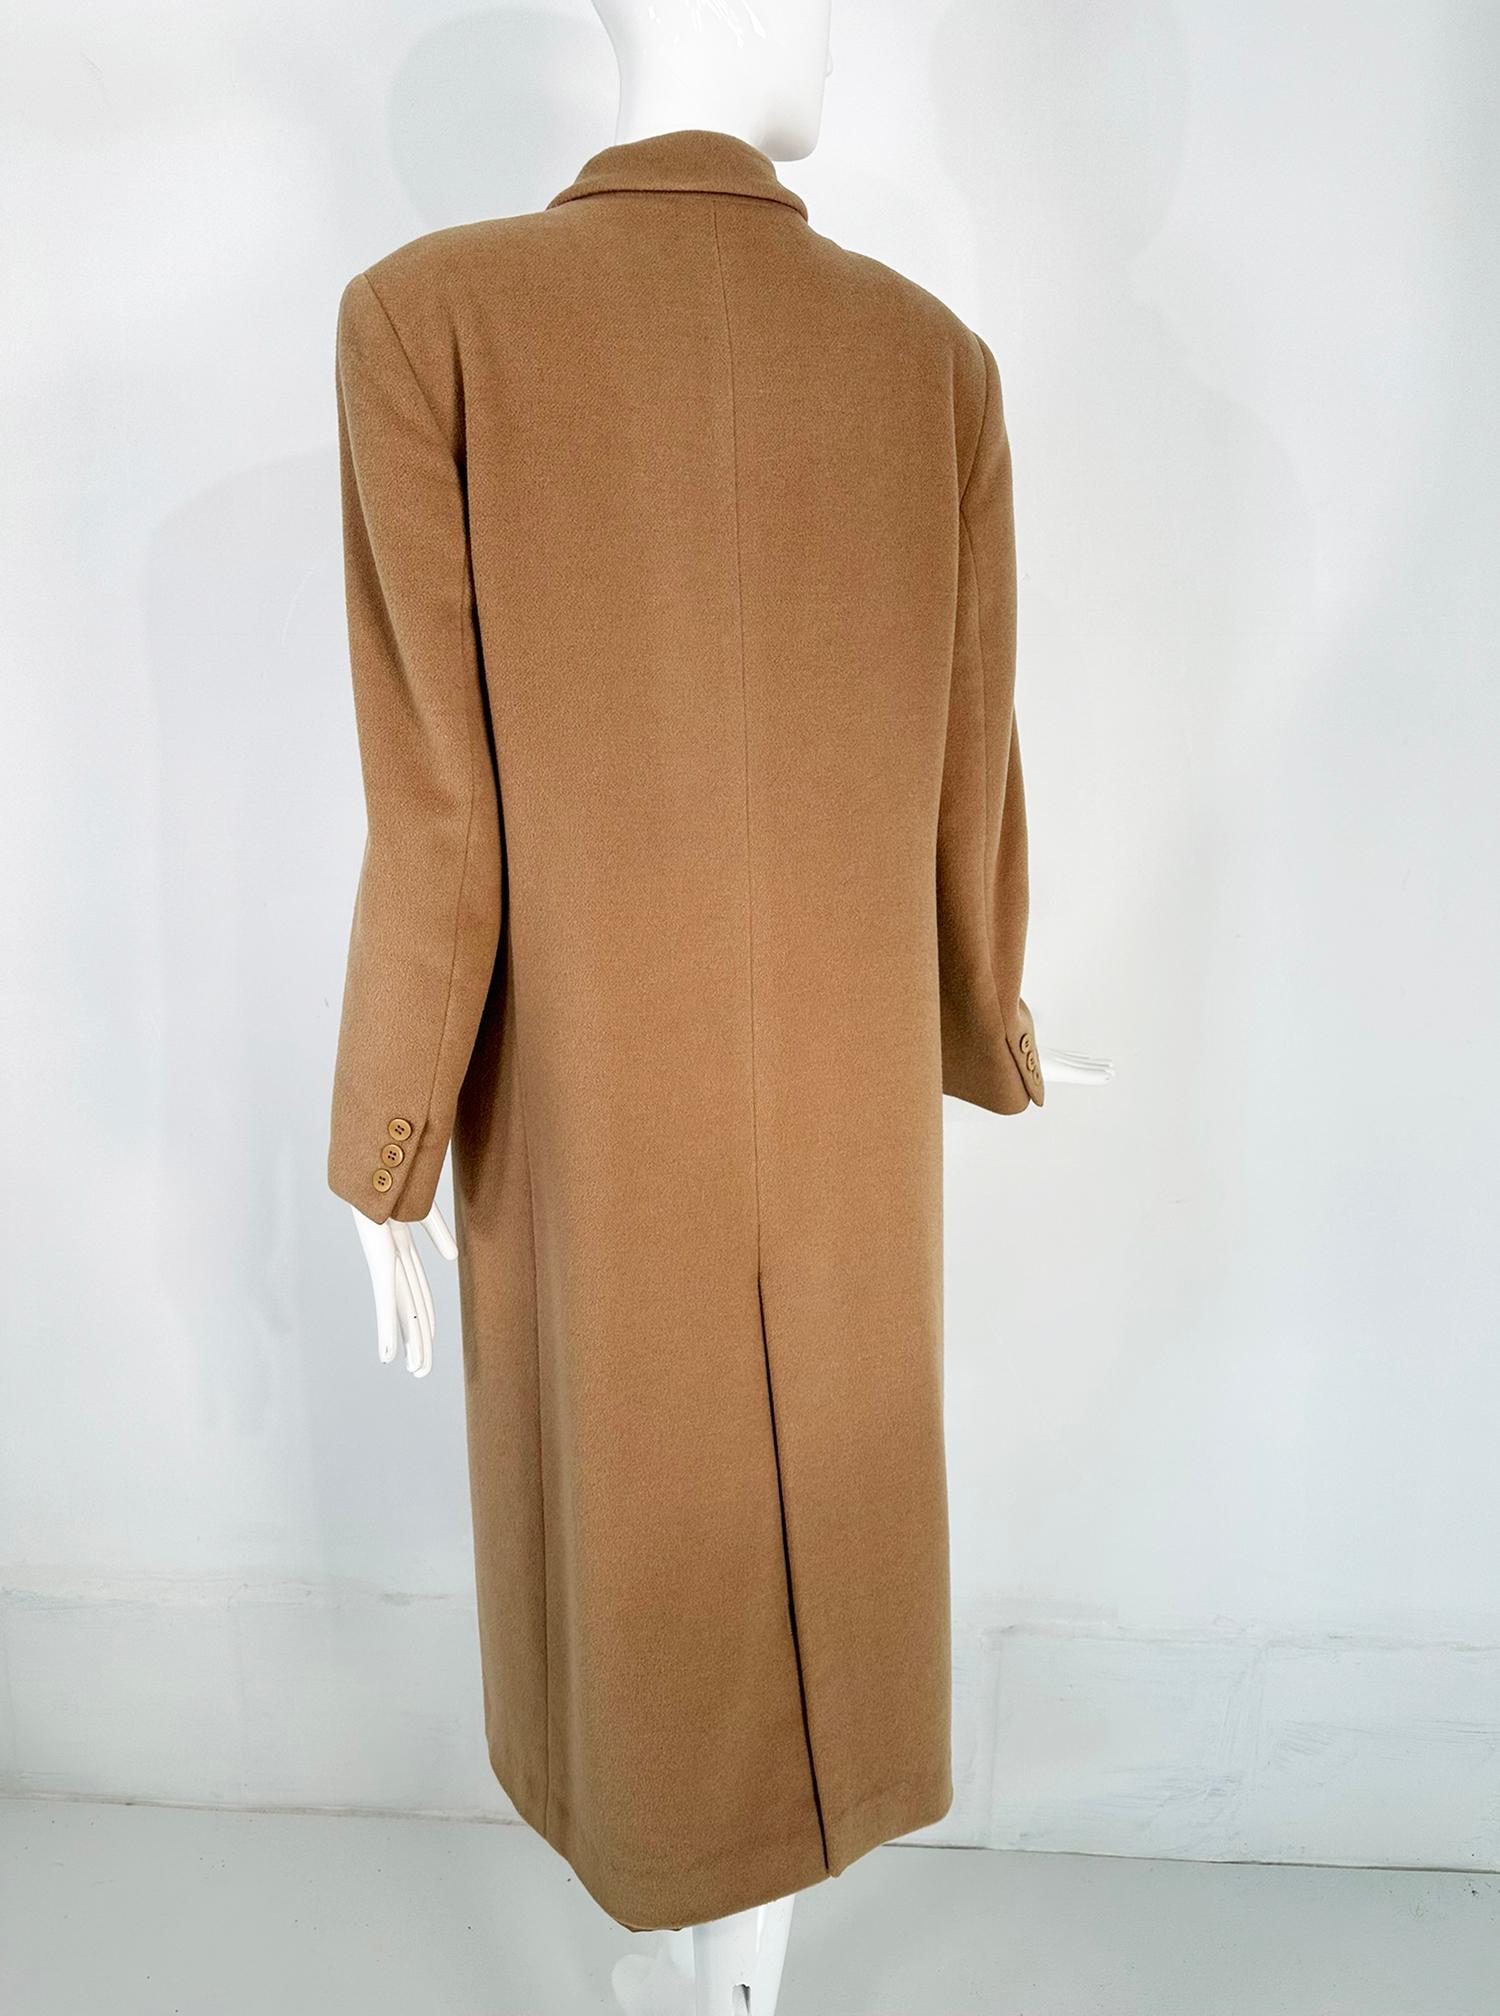 Giorgio Armani Camel Hair Classic Double Breasted Coat 1990s For Sale 3